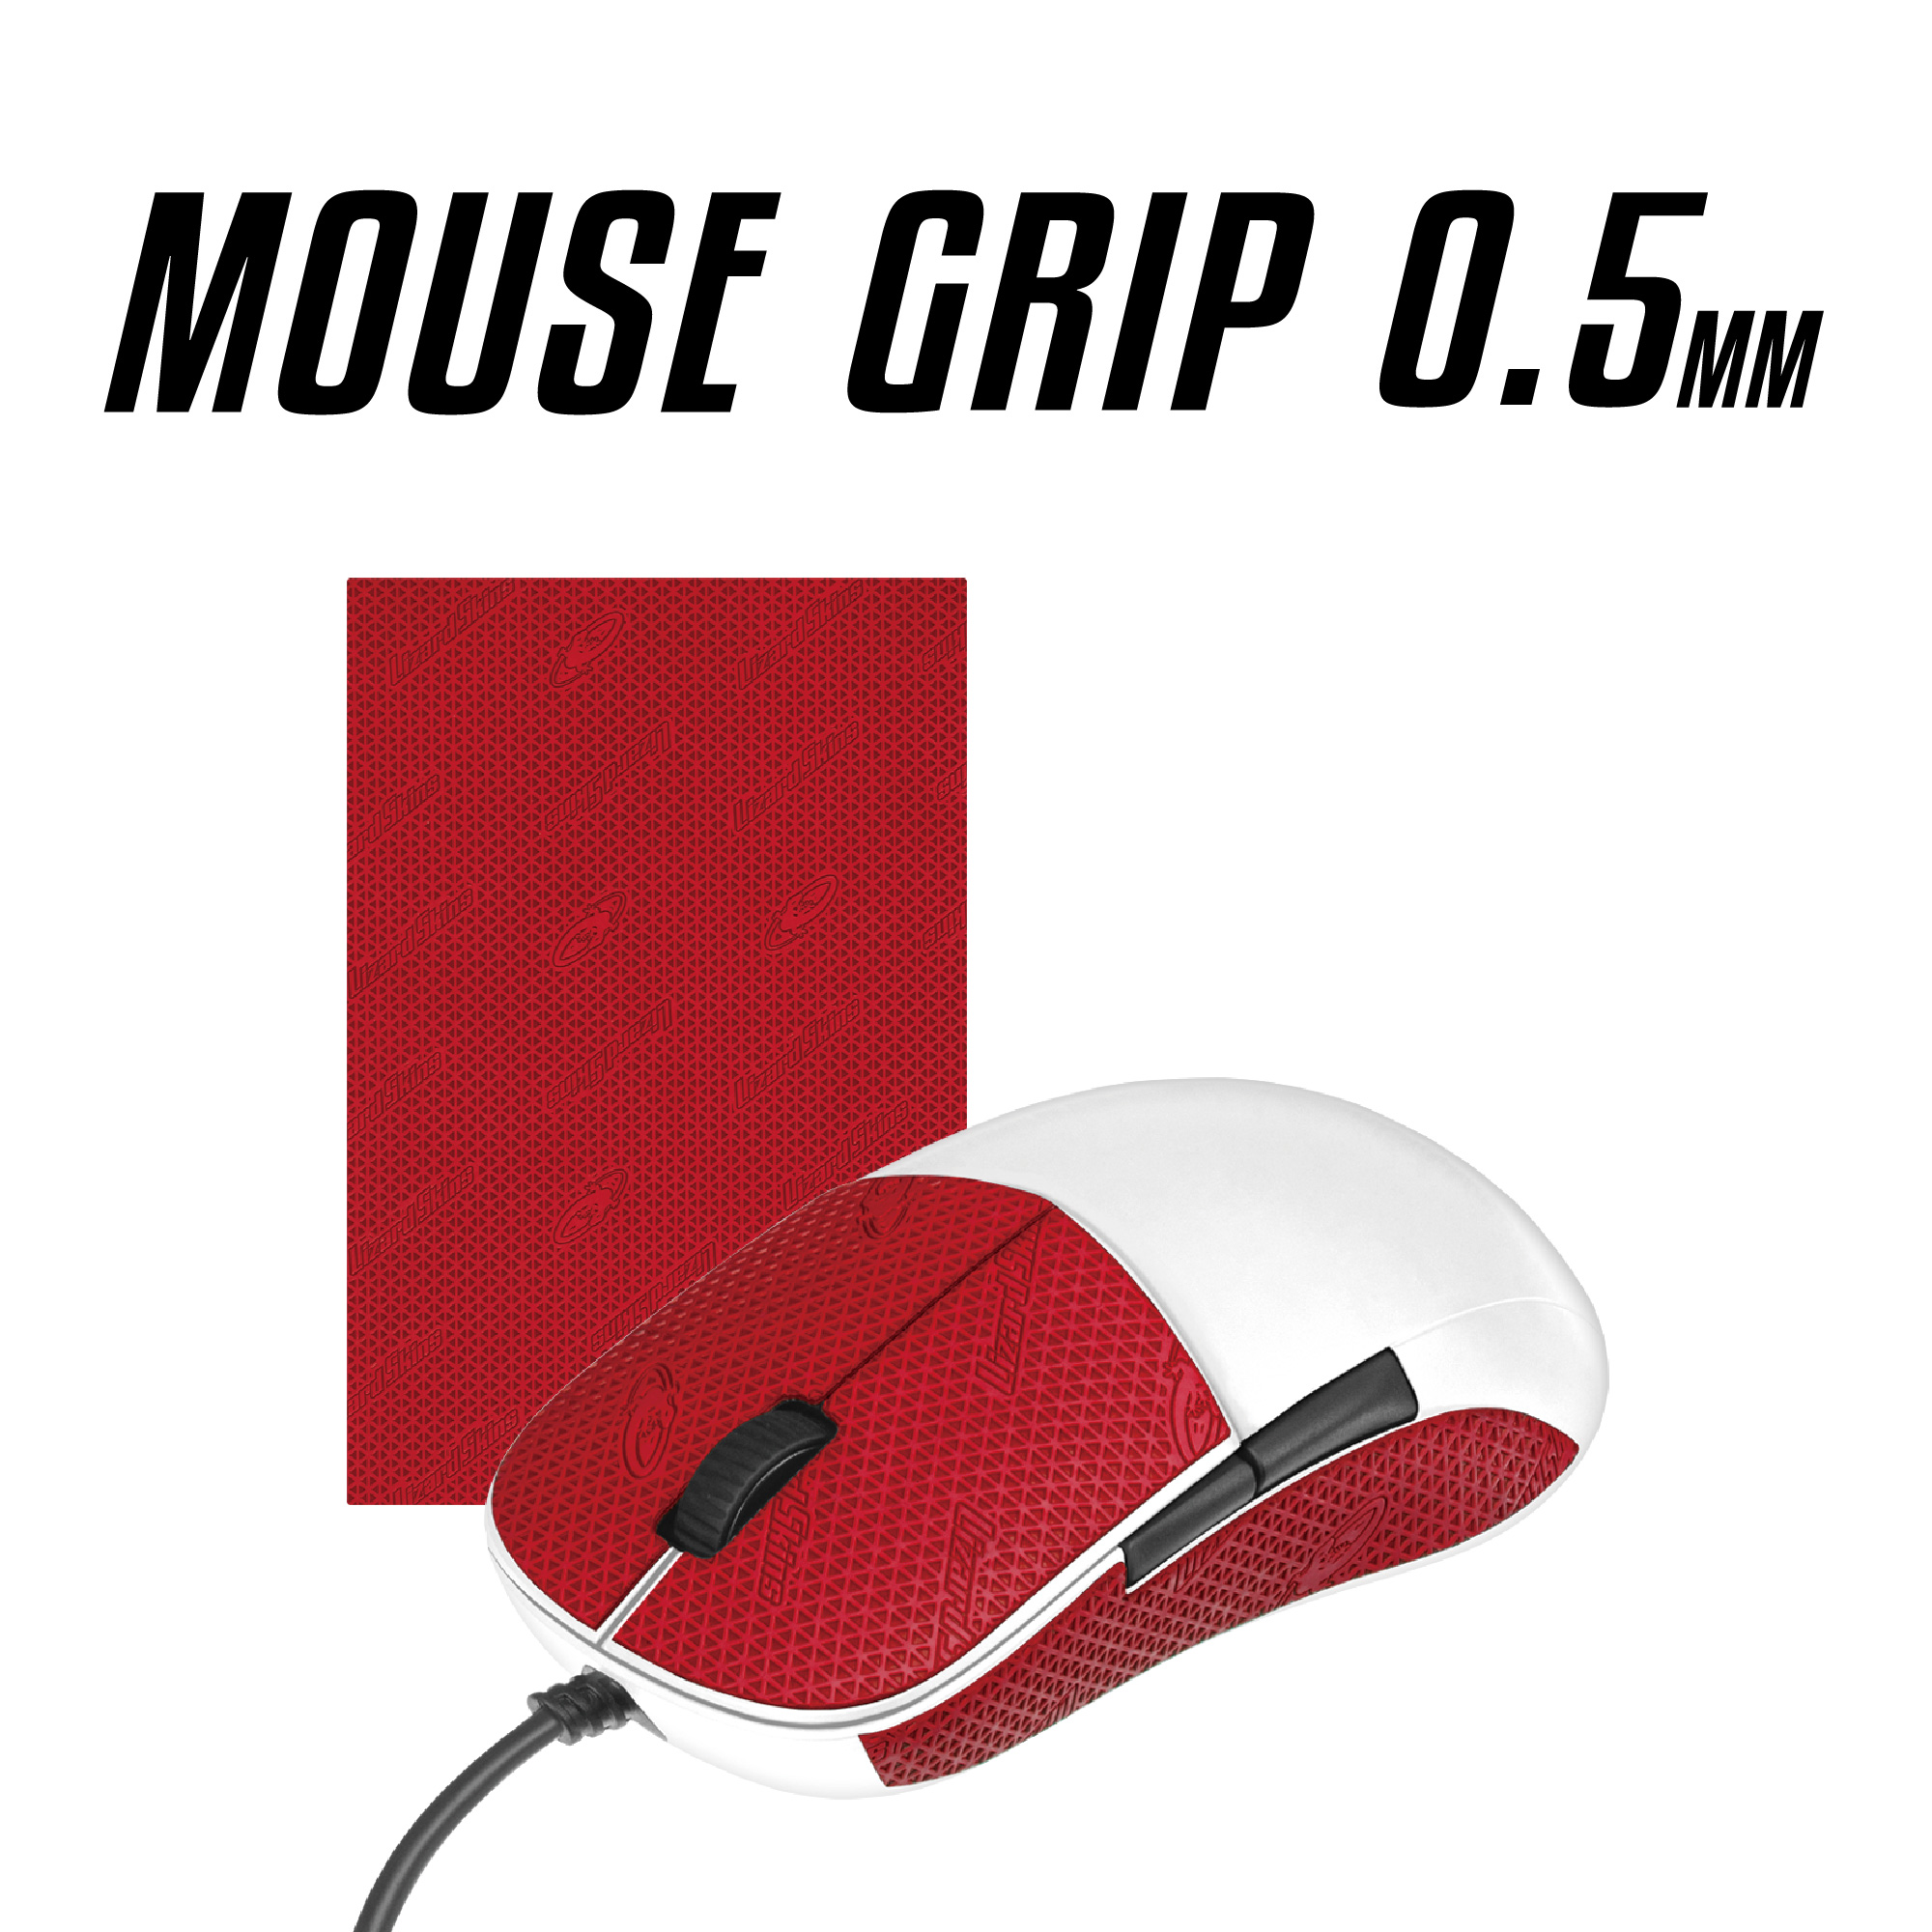 Mouse Grip